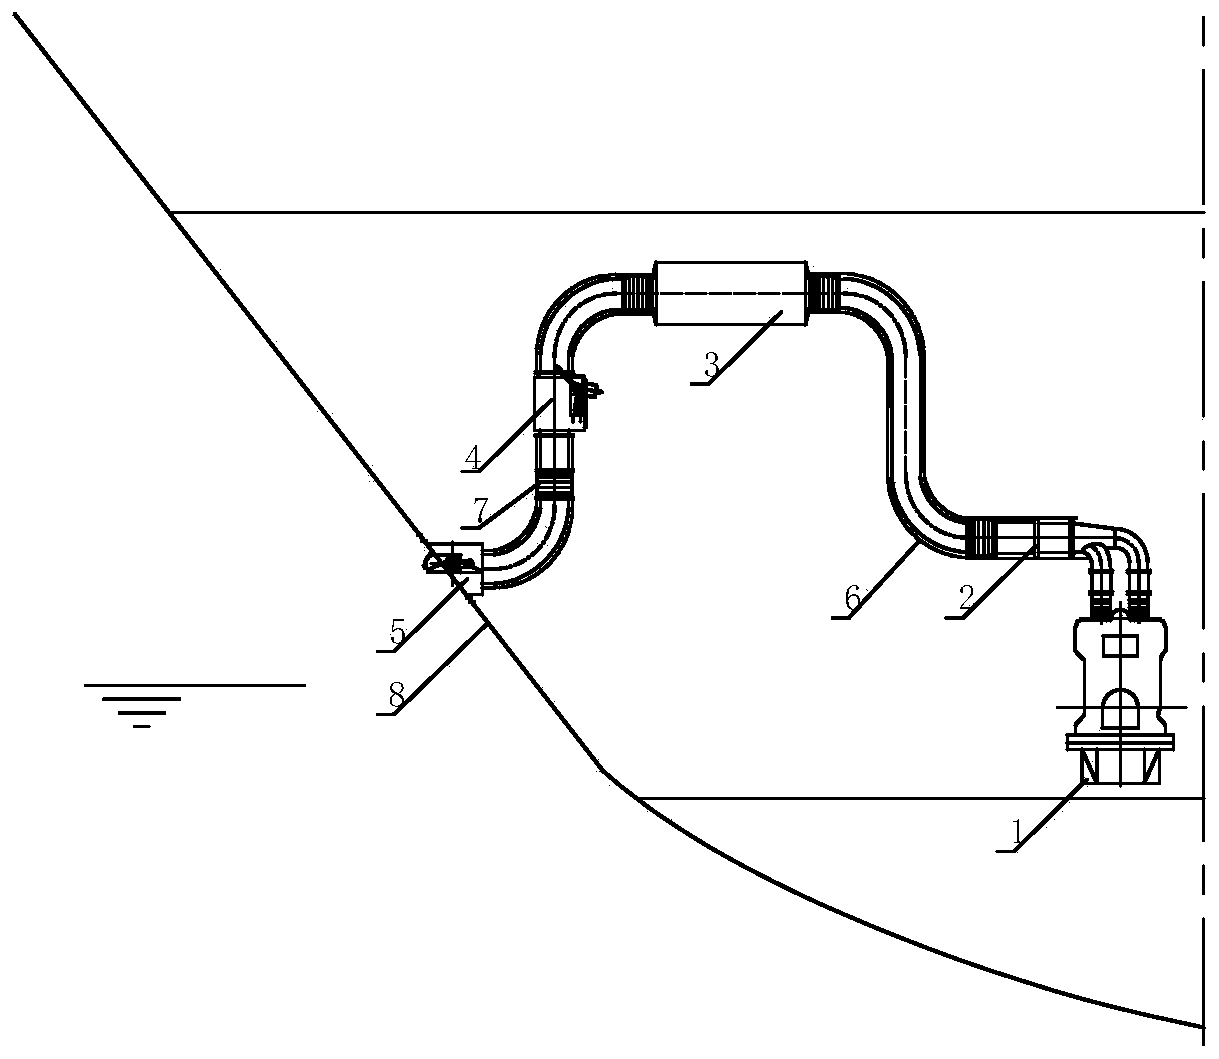 Marine exhaust pipeline system